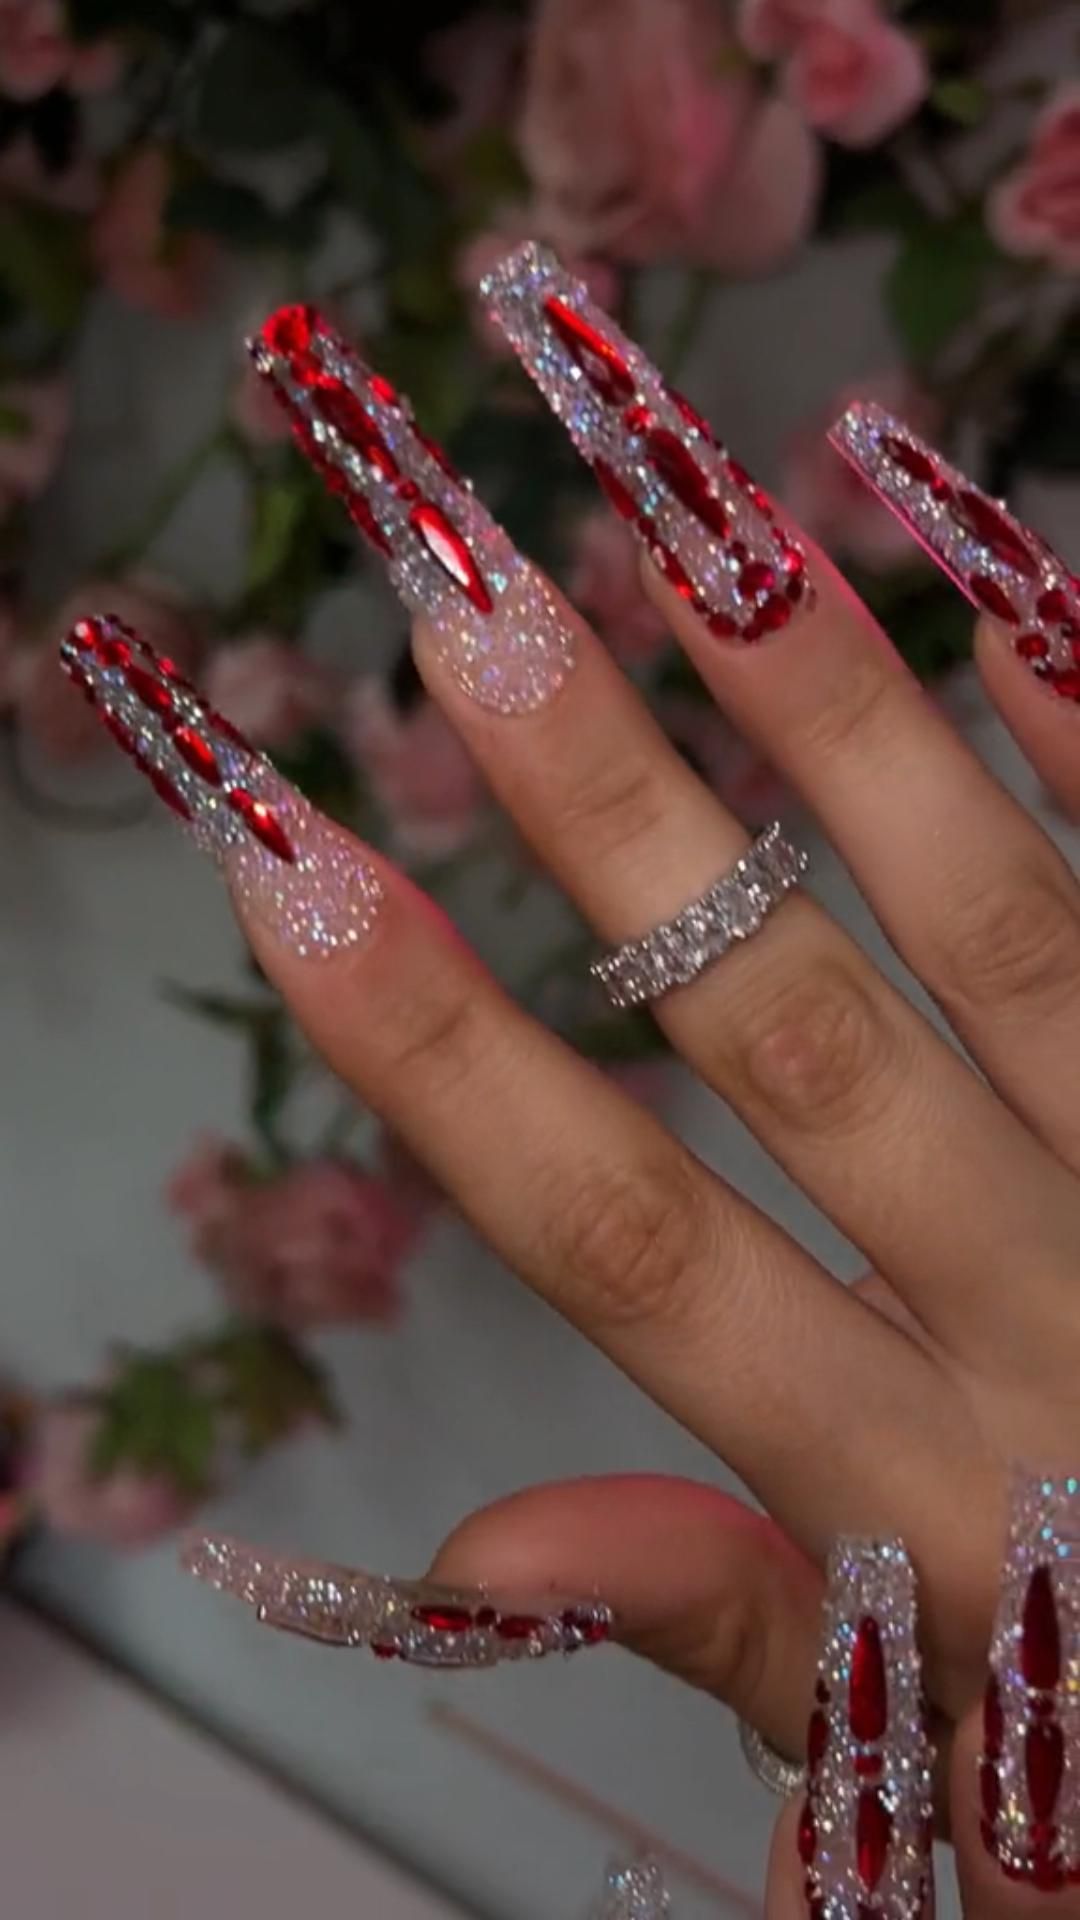 Sparkling Festive Nail Art: Adding Rhinestones to Your Christmas Manicure